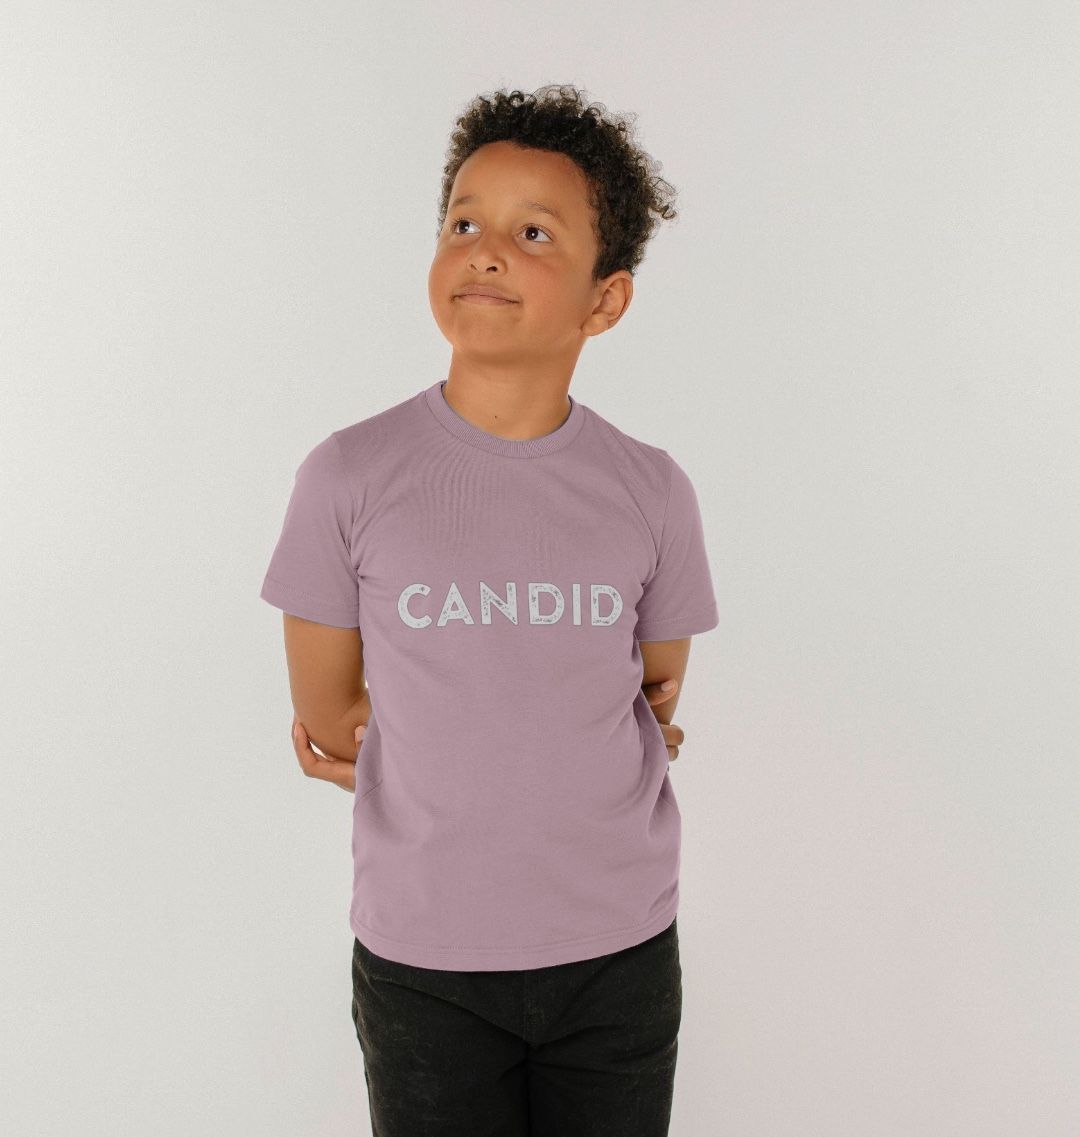 Candid Kids T-Shirt